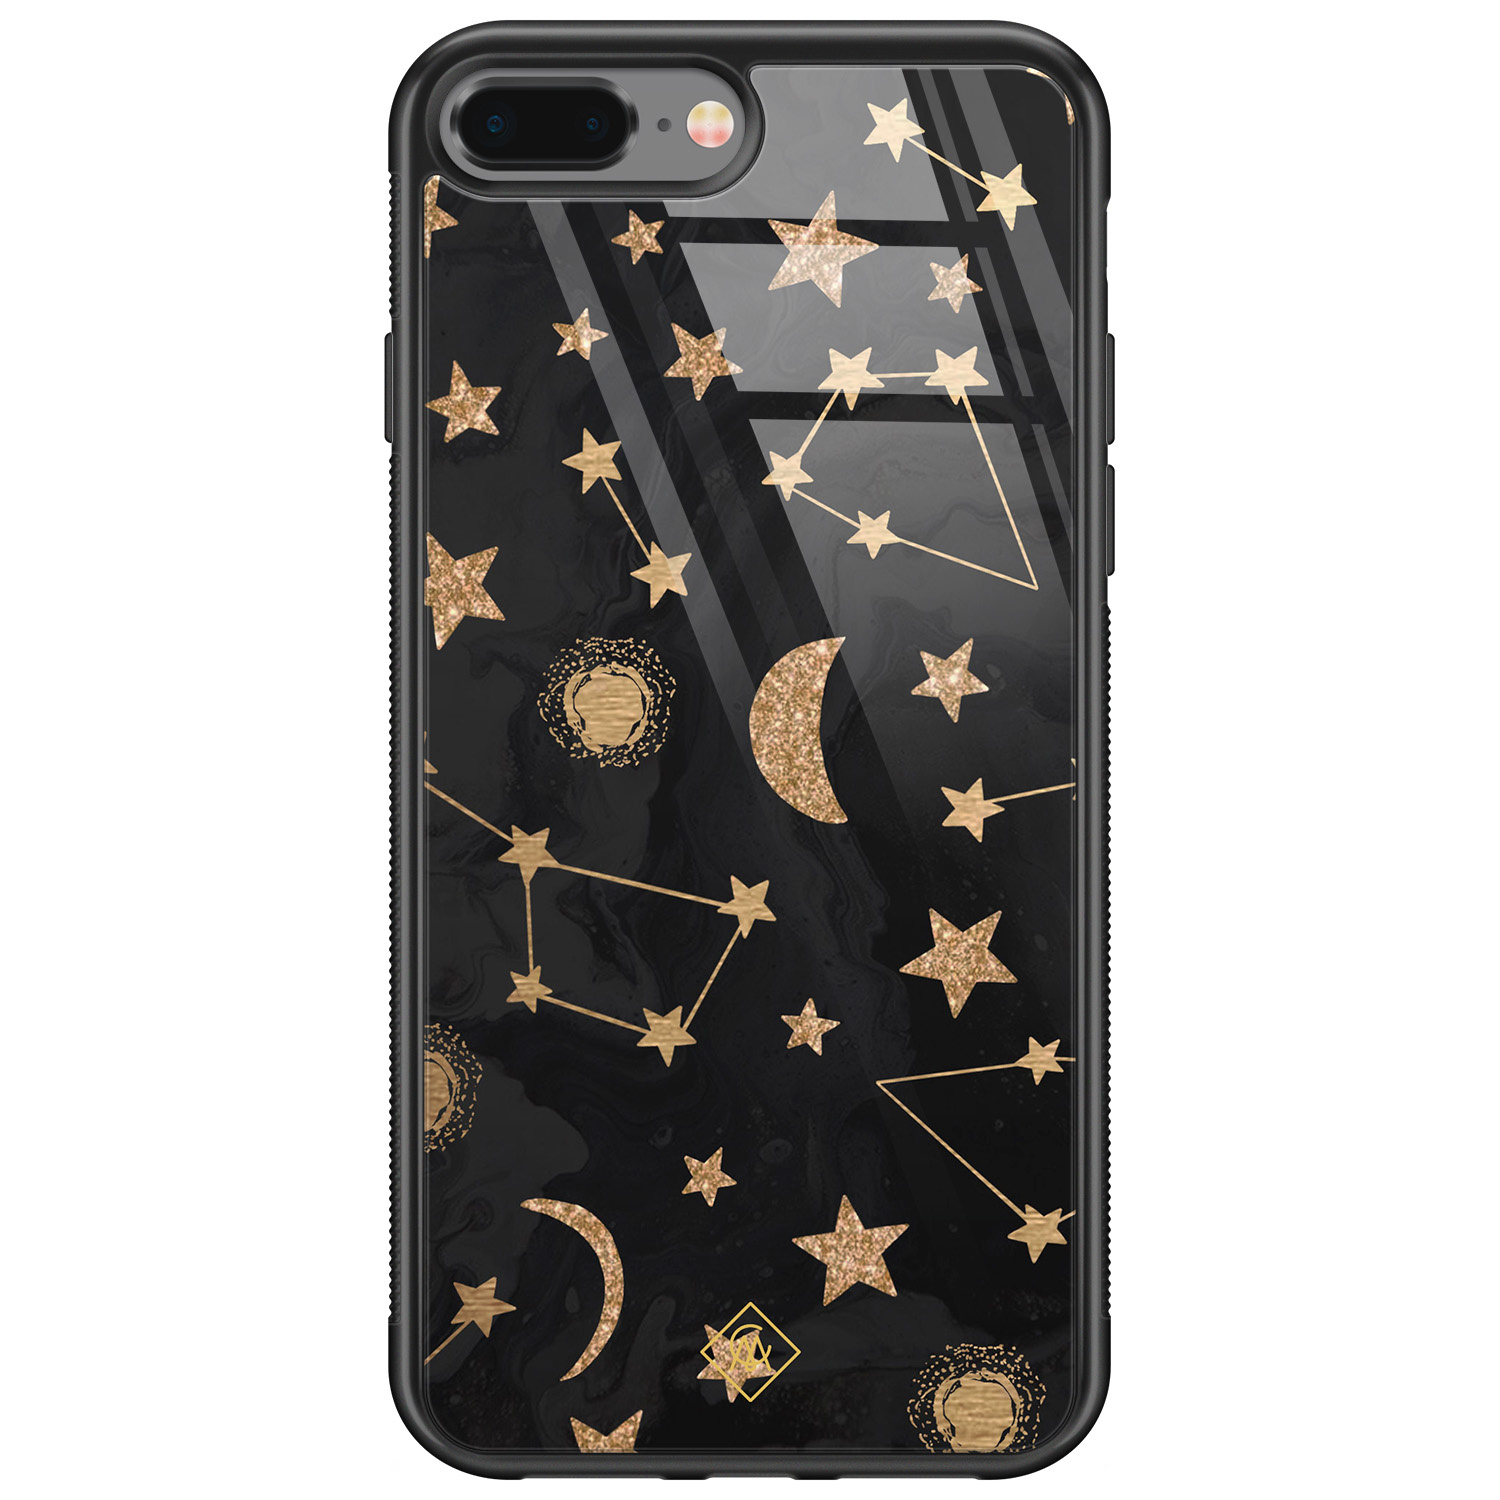 iPhone 8 Plus/7 Plus glazen hardcase - Counting the stars